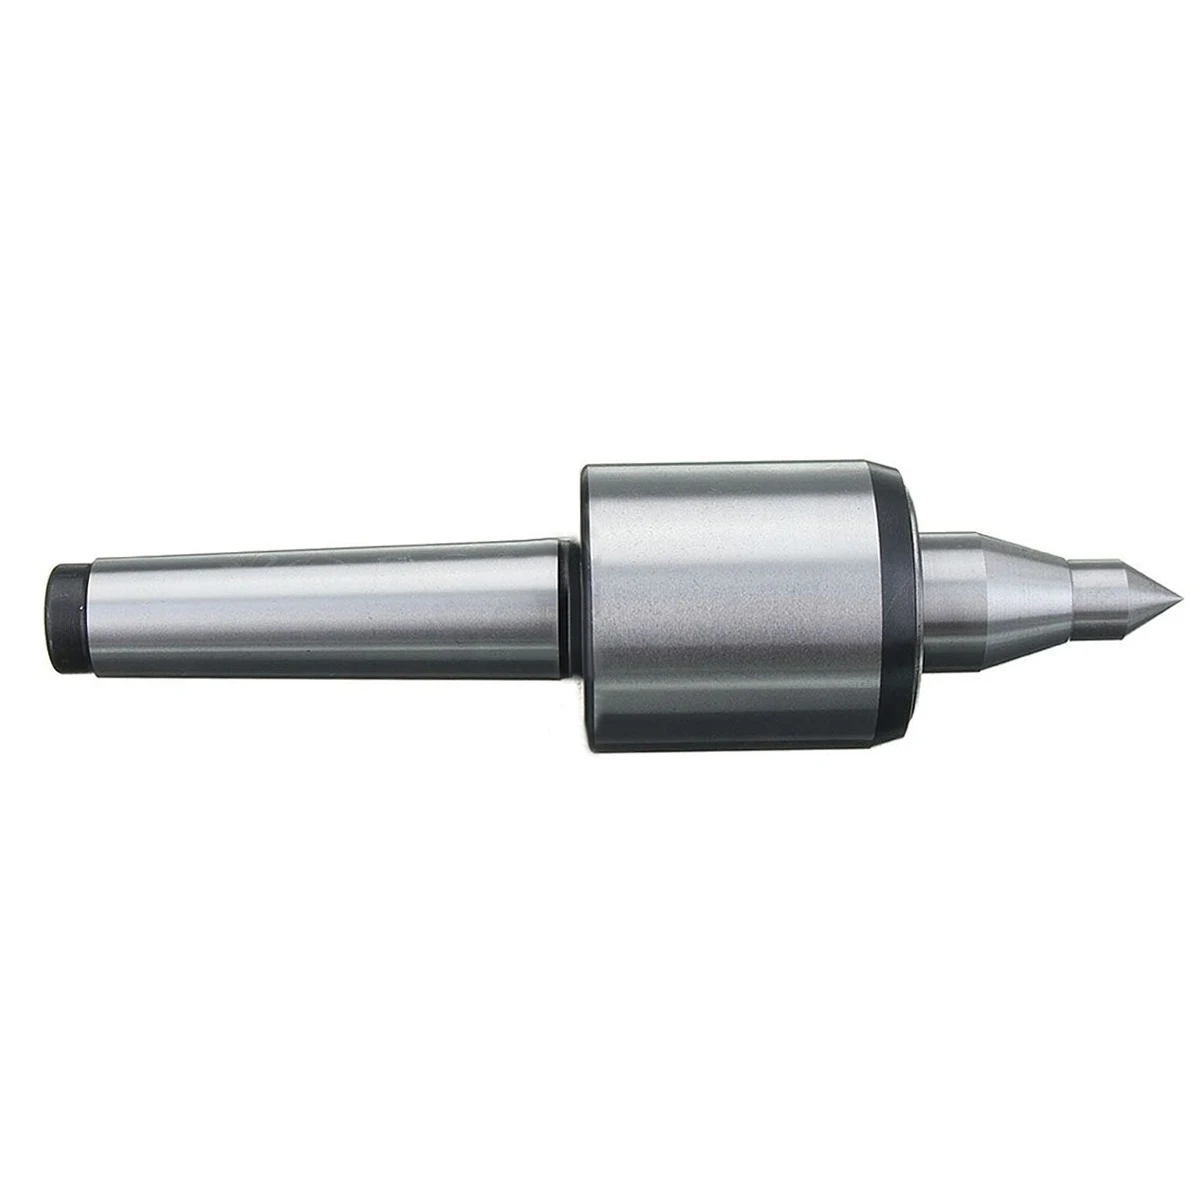 Silver MT3 Lathe Live Center Morse Taper Bearing 60 Degree Long Nose CNC Lathe Turning Tool 185 x 48mm